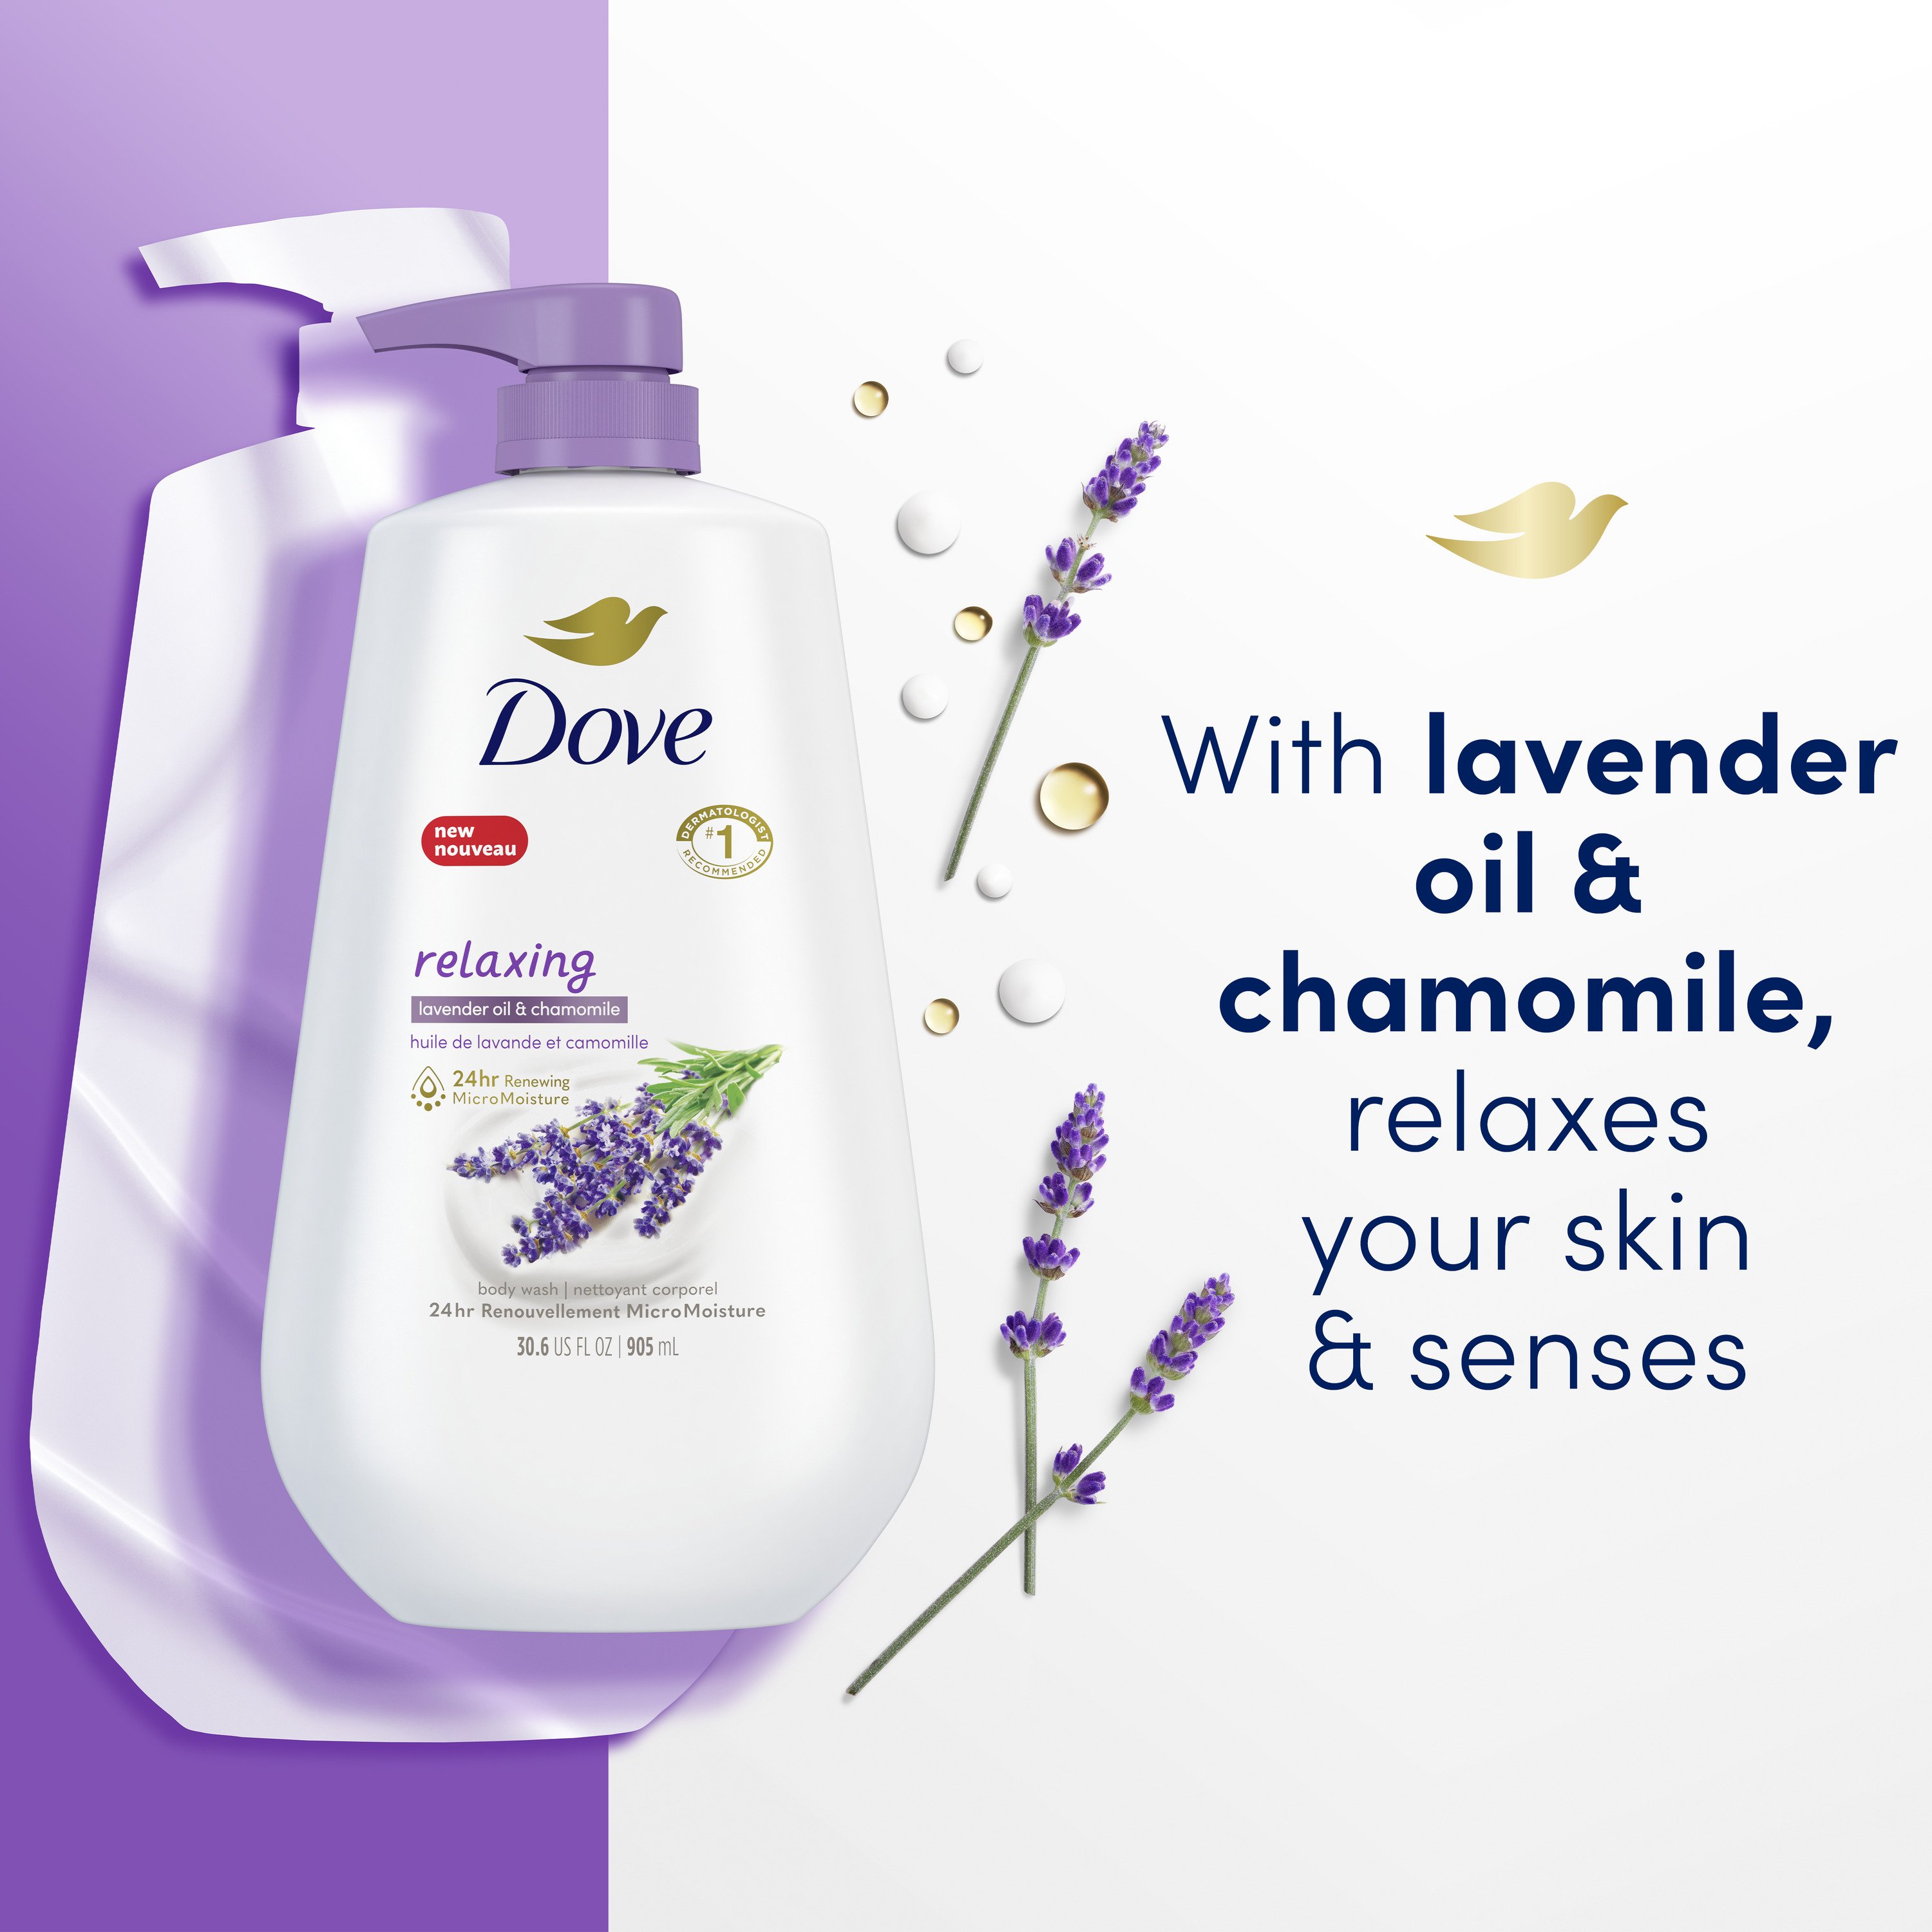 Dove Go Fresh Shower Gel Body Wash Lavender and Chamomile 33.8 Ounce Pump  Bottle